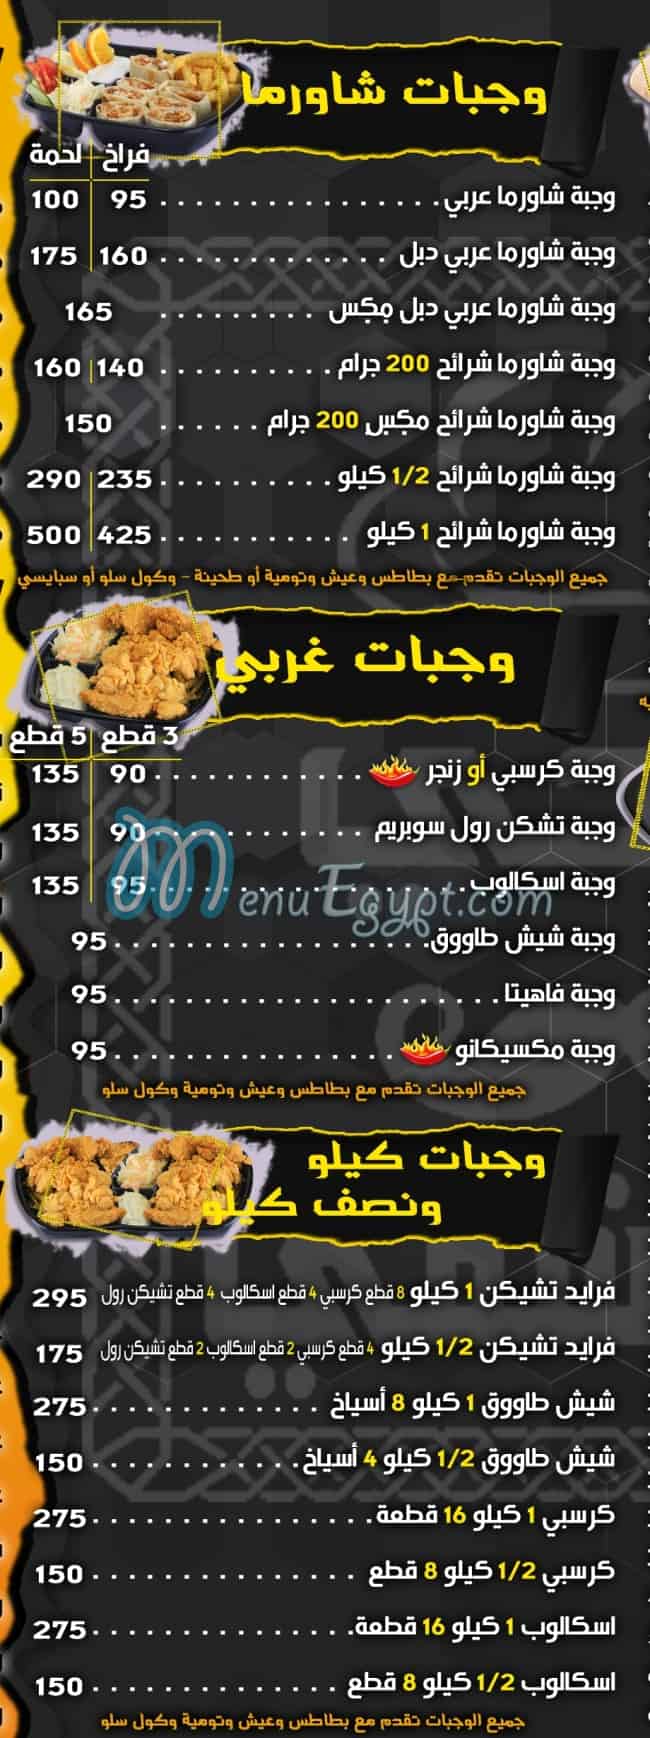 Sobhy El Demshqy delivery menu